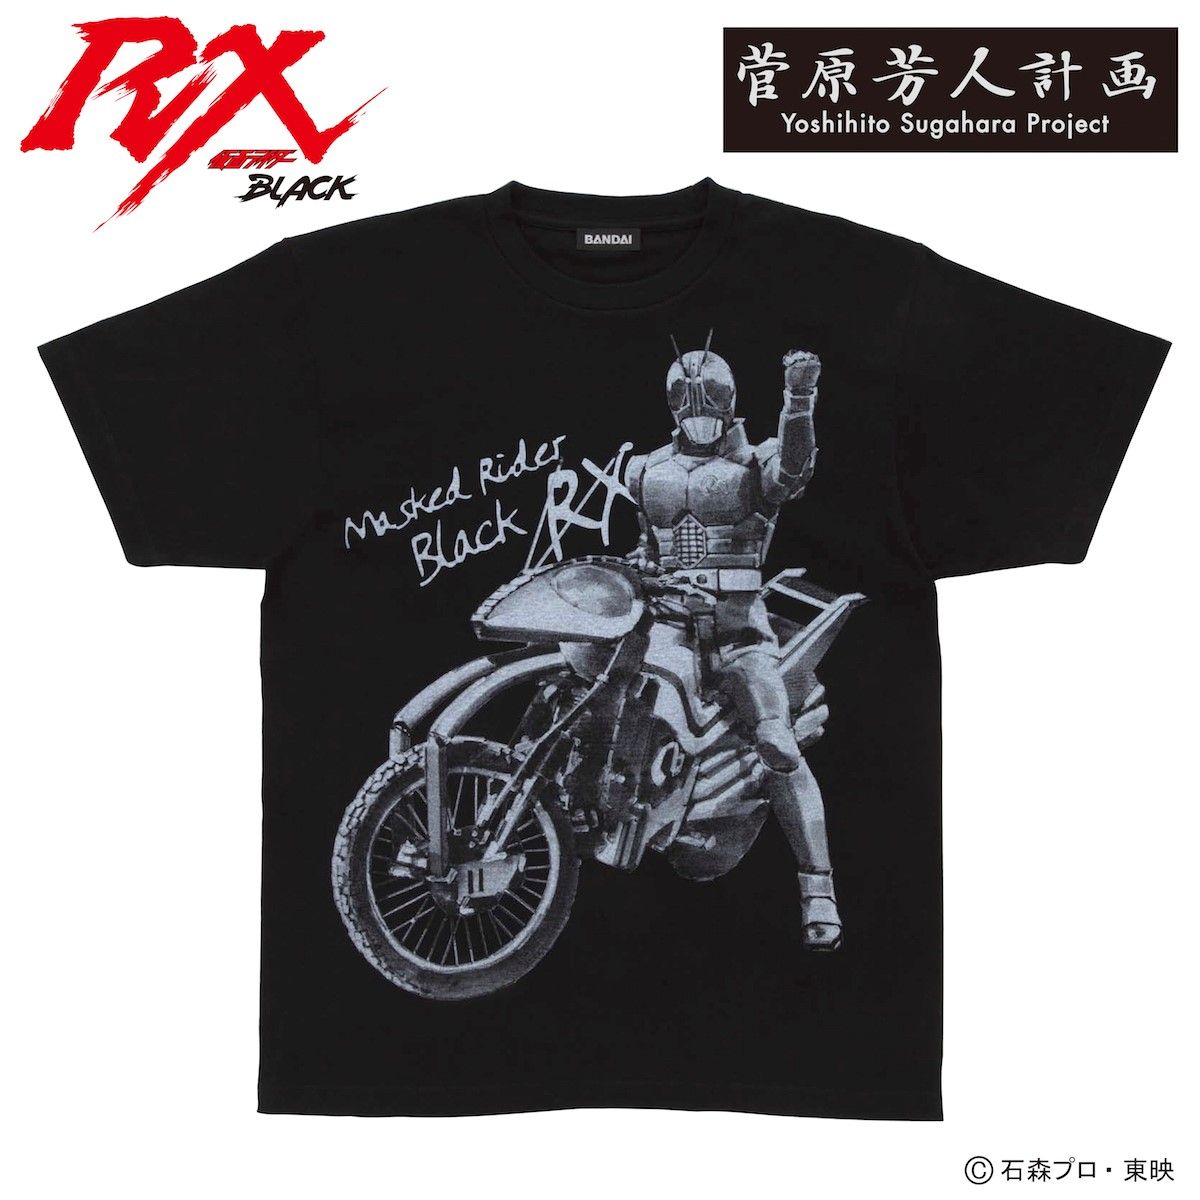 Yoshihito Sugahara Project Kamen Rider BLACK RX T-shirt